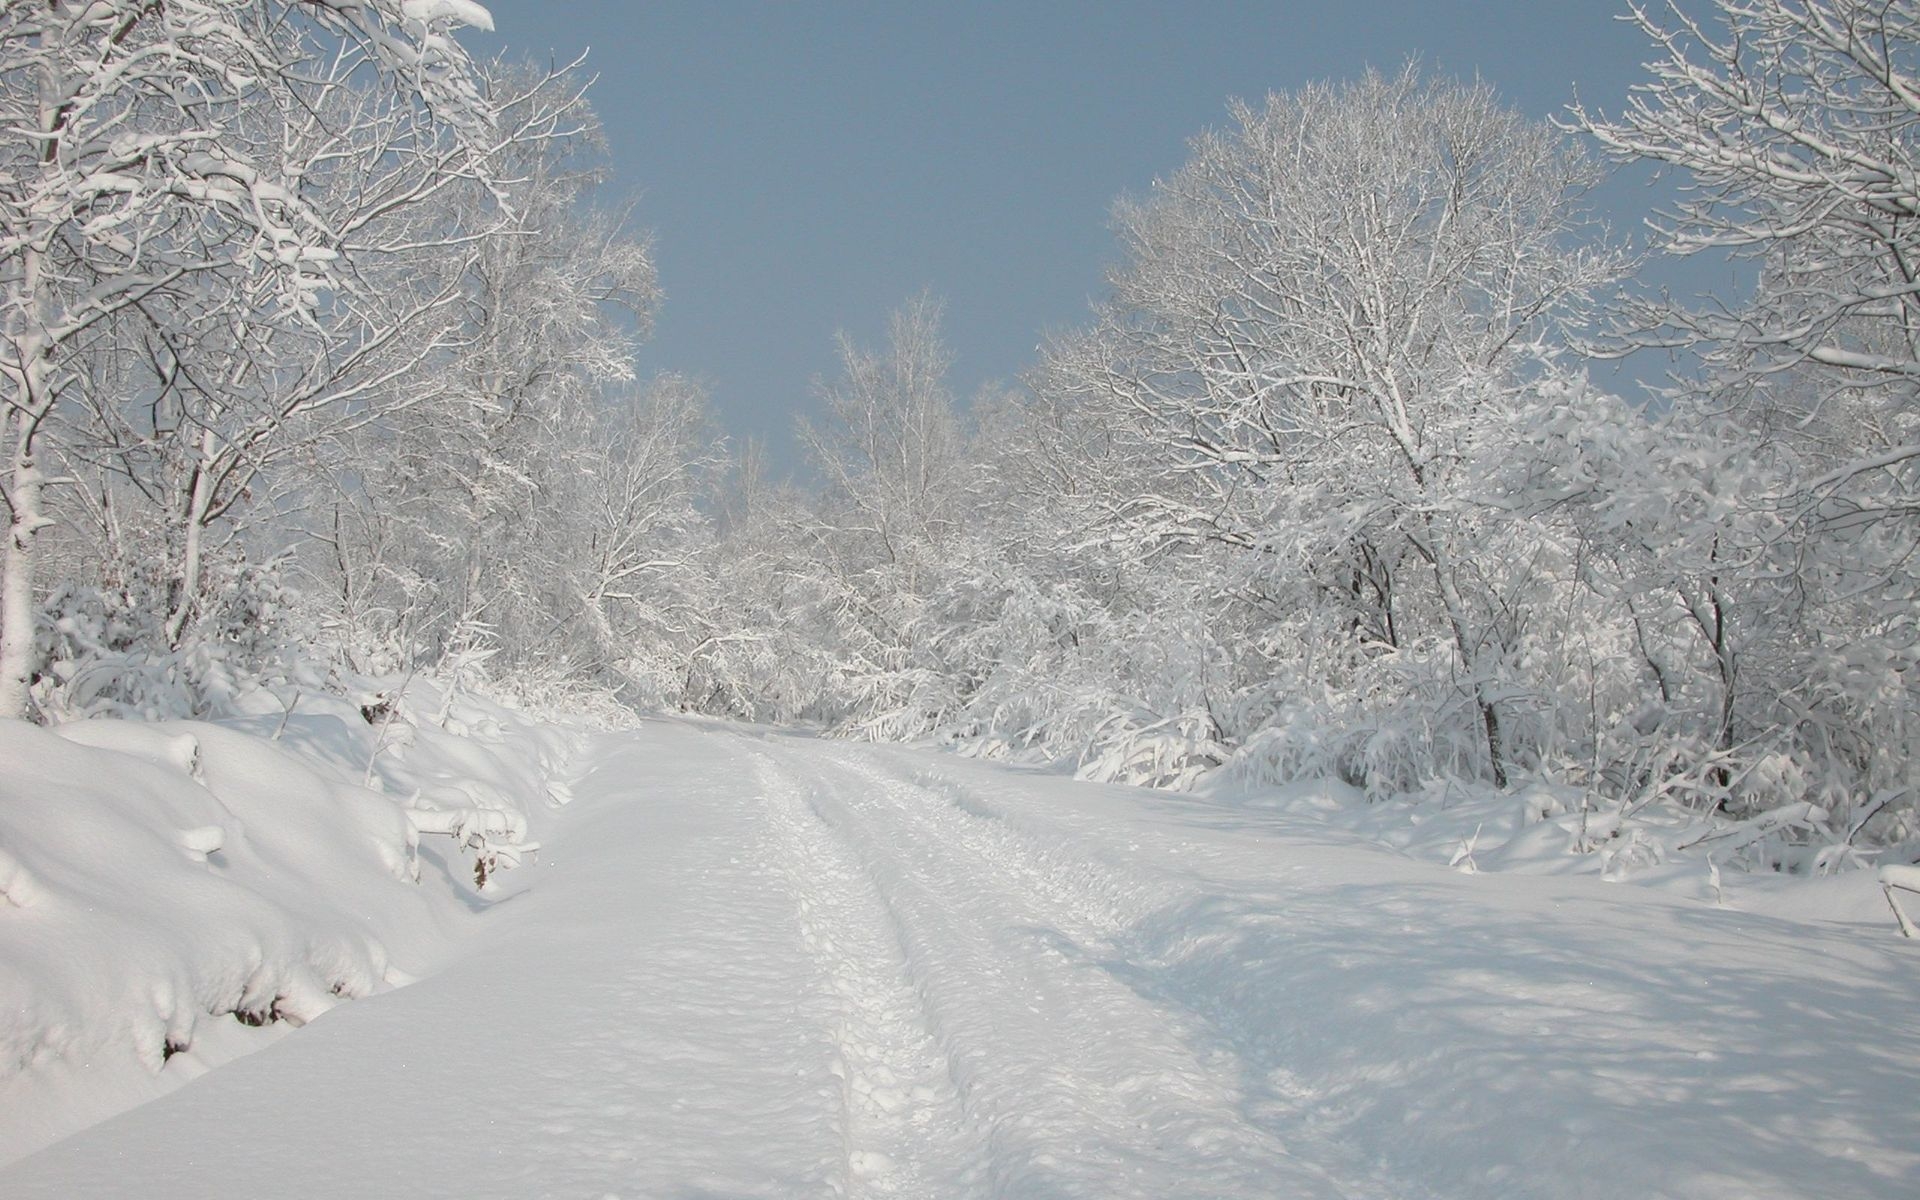 snow, trees, roads - desktop wallpaper